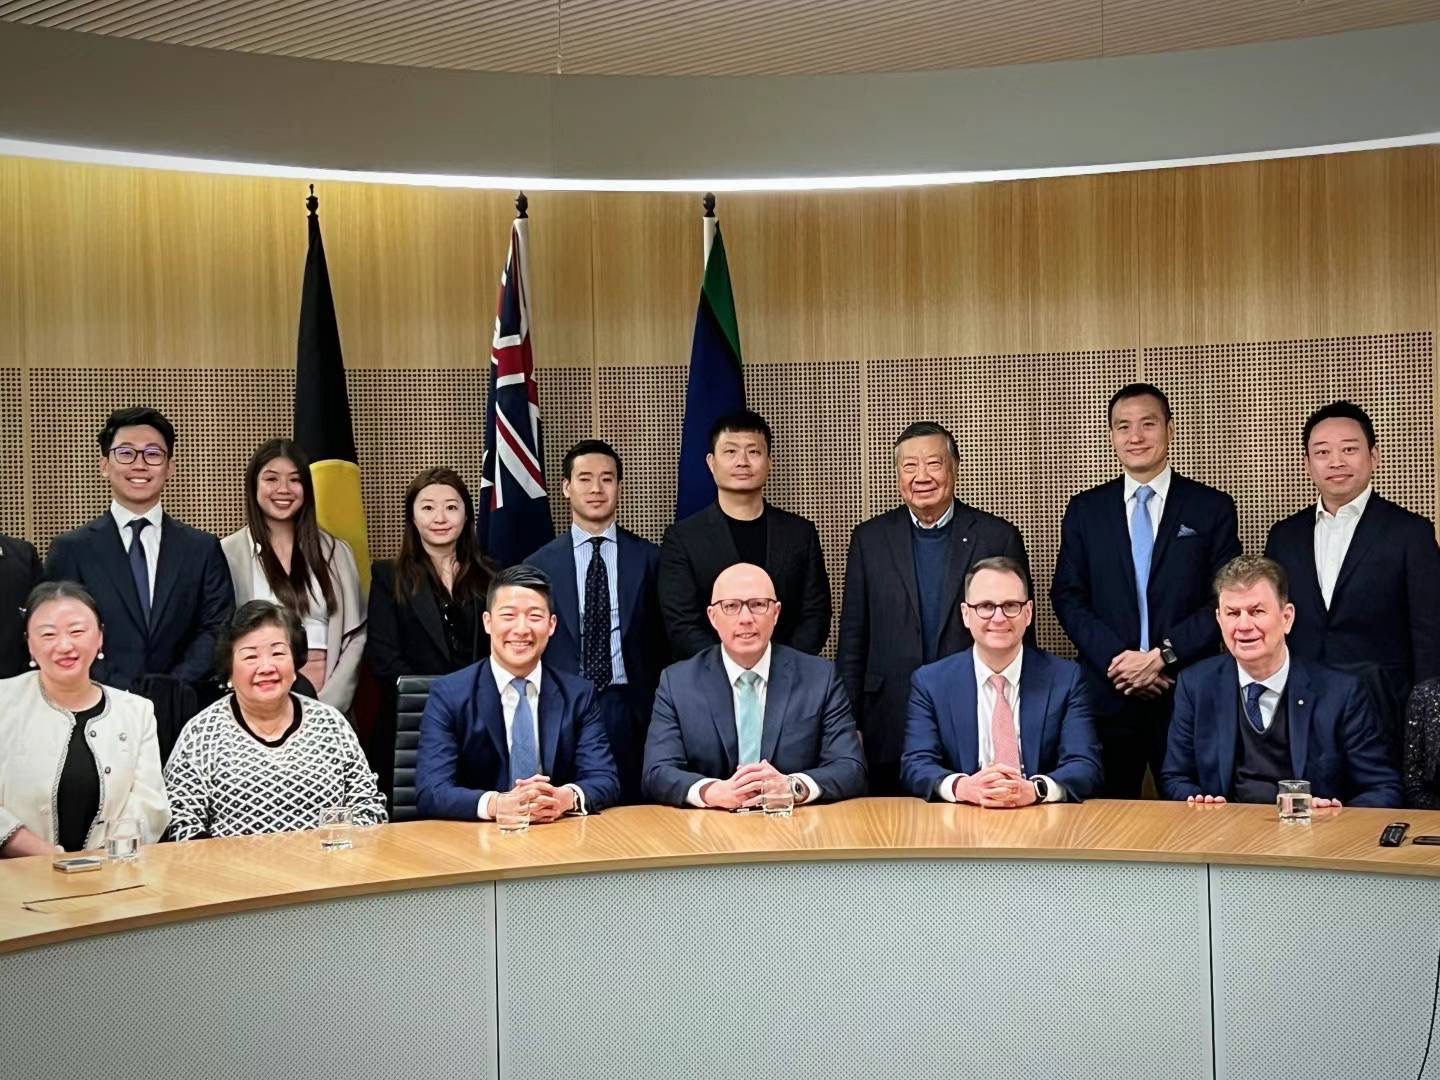 【ACY证券】受邀出席与澳大利亚自由党领袖Peter Dutton的圆桌会议